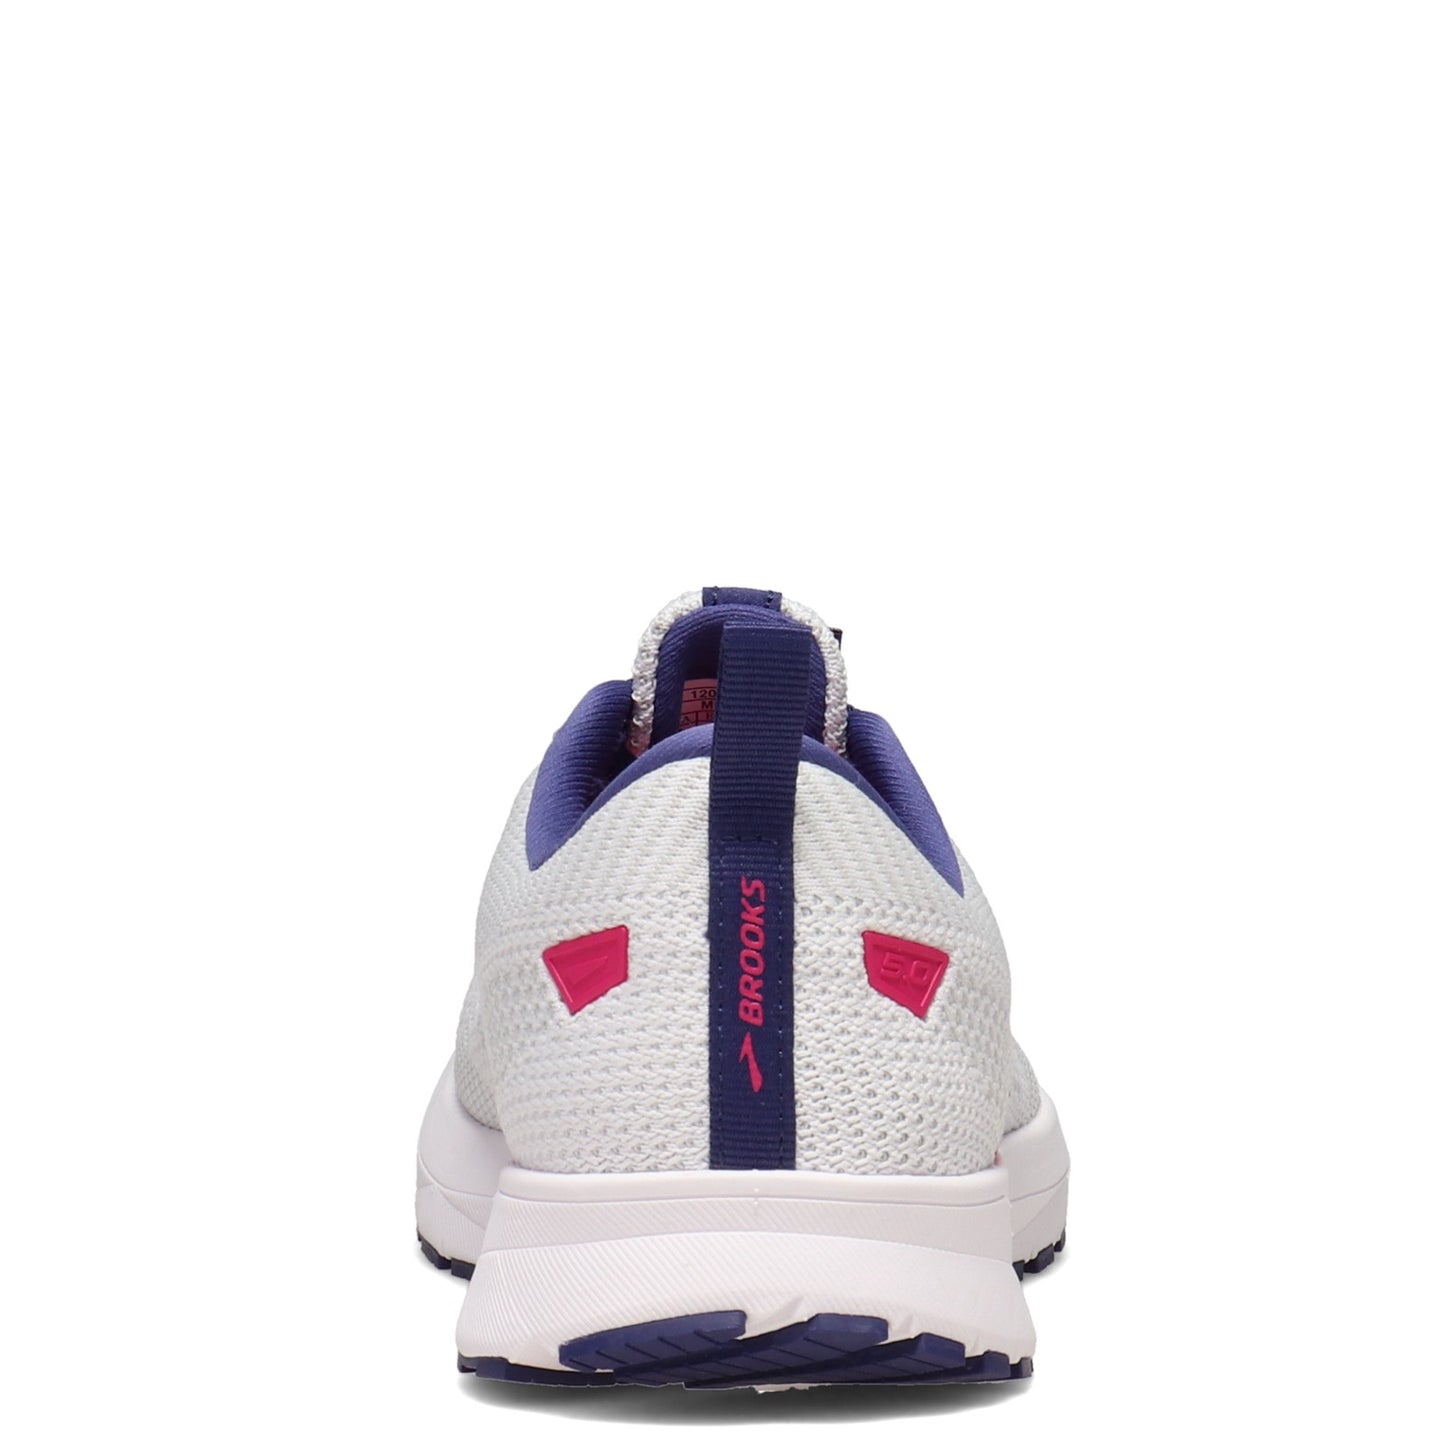 Peltz Shoes  Women's Brooks Revel 5 Running Shoe White/Navy/Pink 120361 1B 193